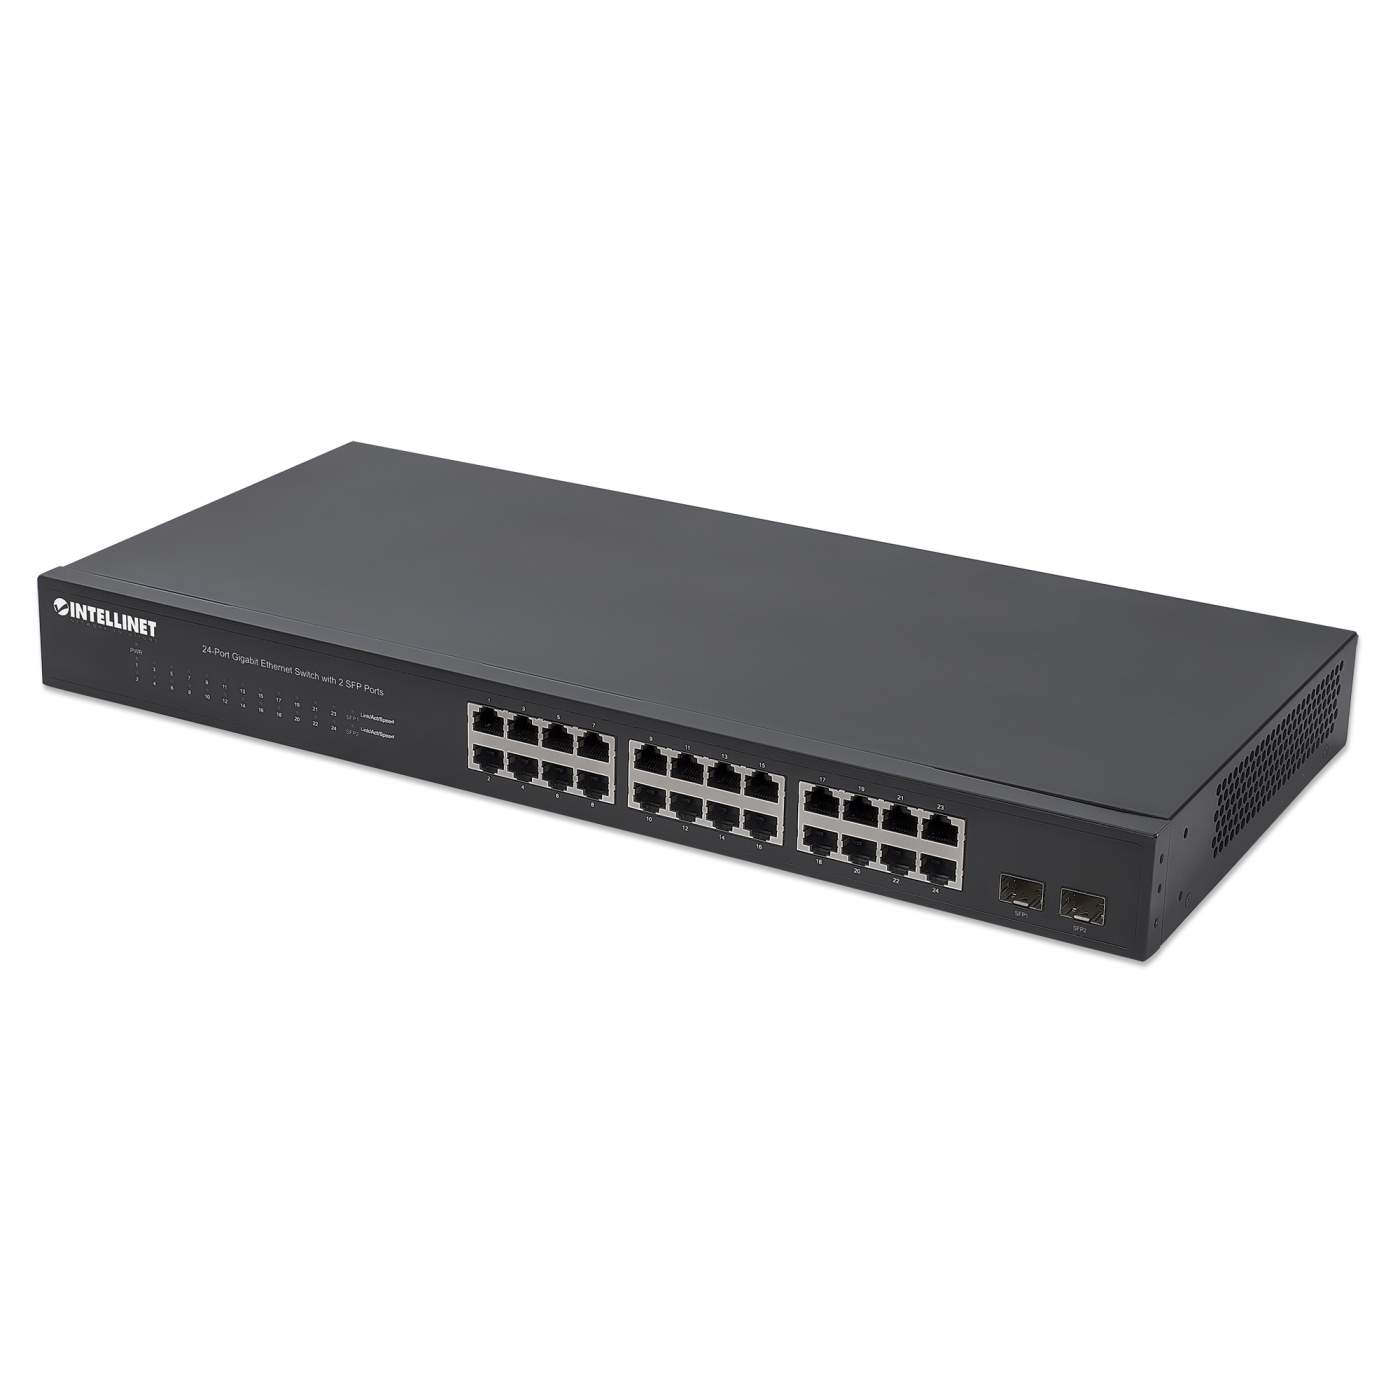 Intellinet 24-Port GbE Switch w/ 2 SFP Ports (561044)